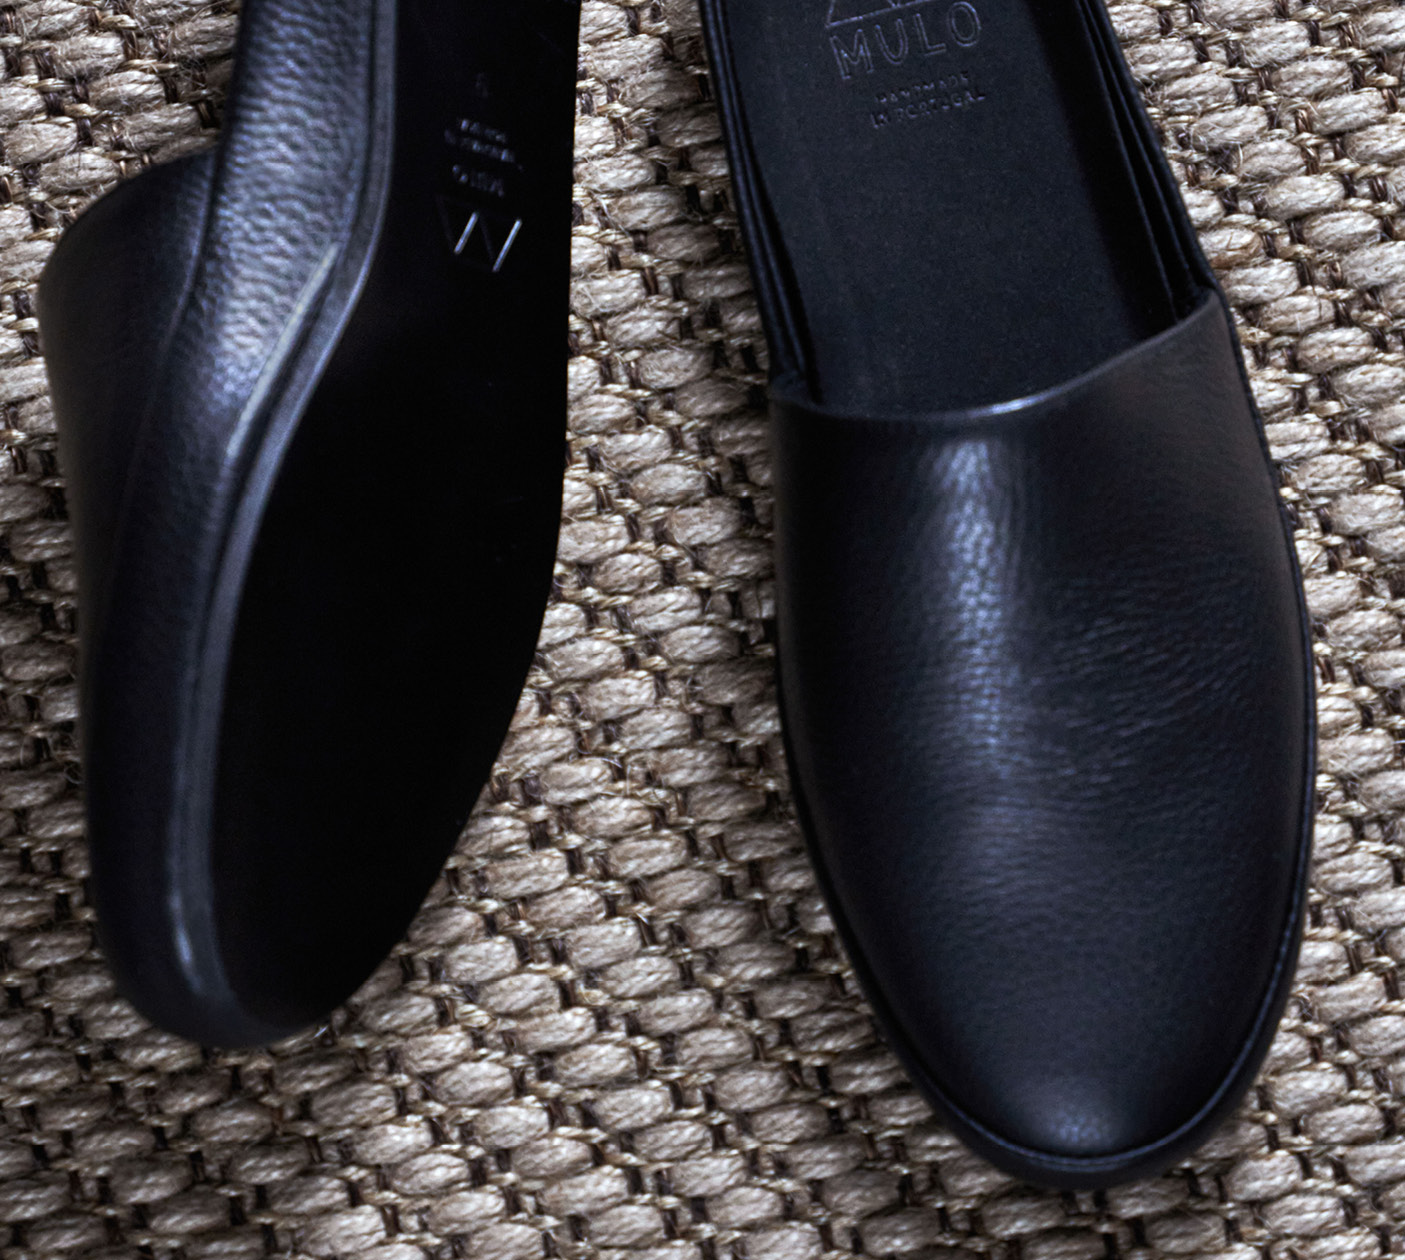 Luxury Slippers for Men - Black Leather Slippers.